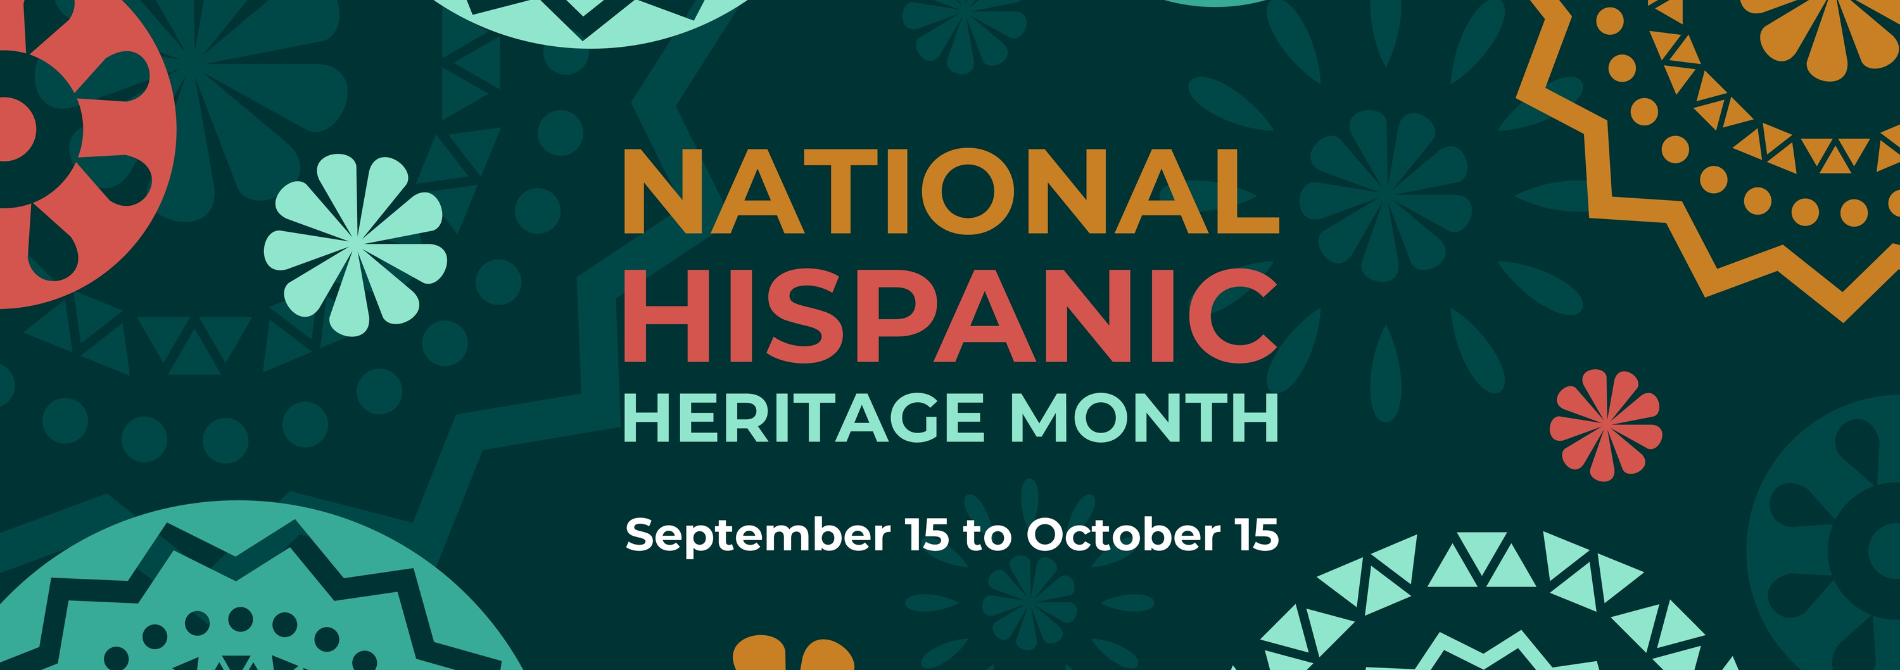 Hispanic Heritage Month Cocktail Recipes